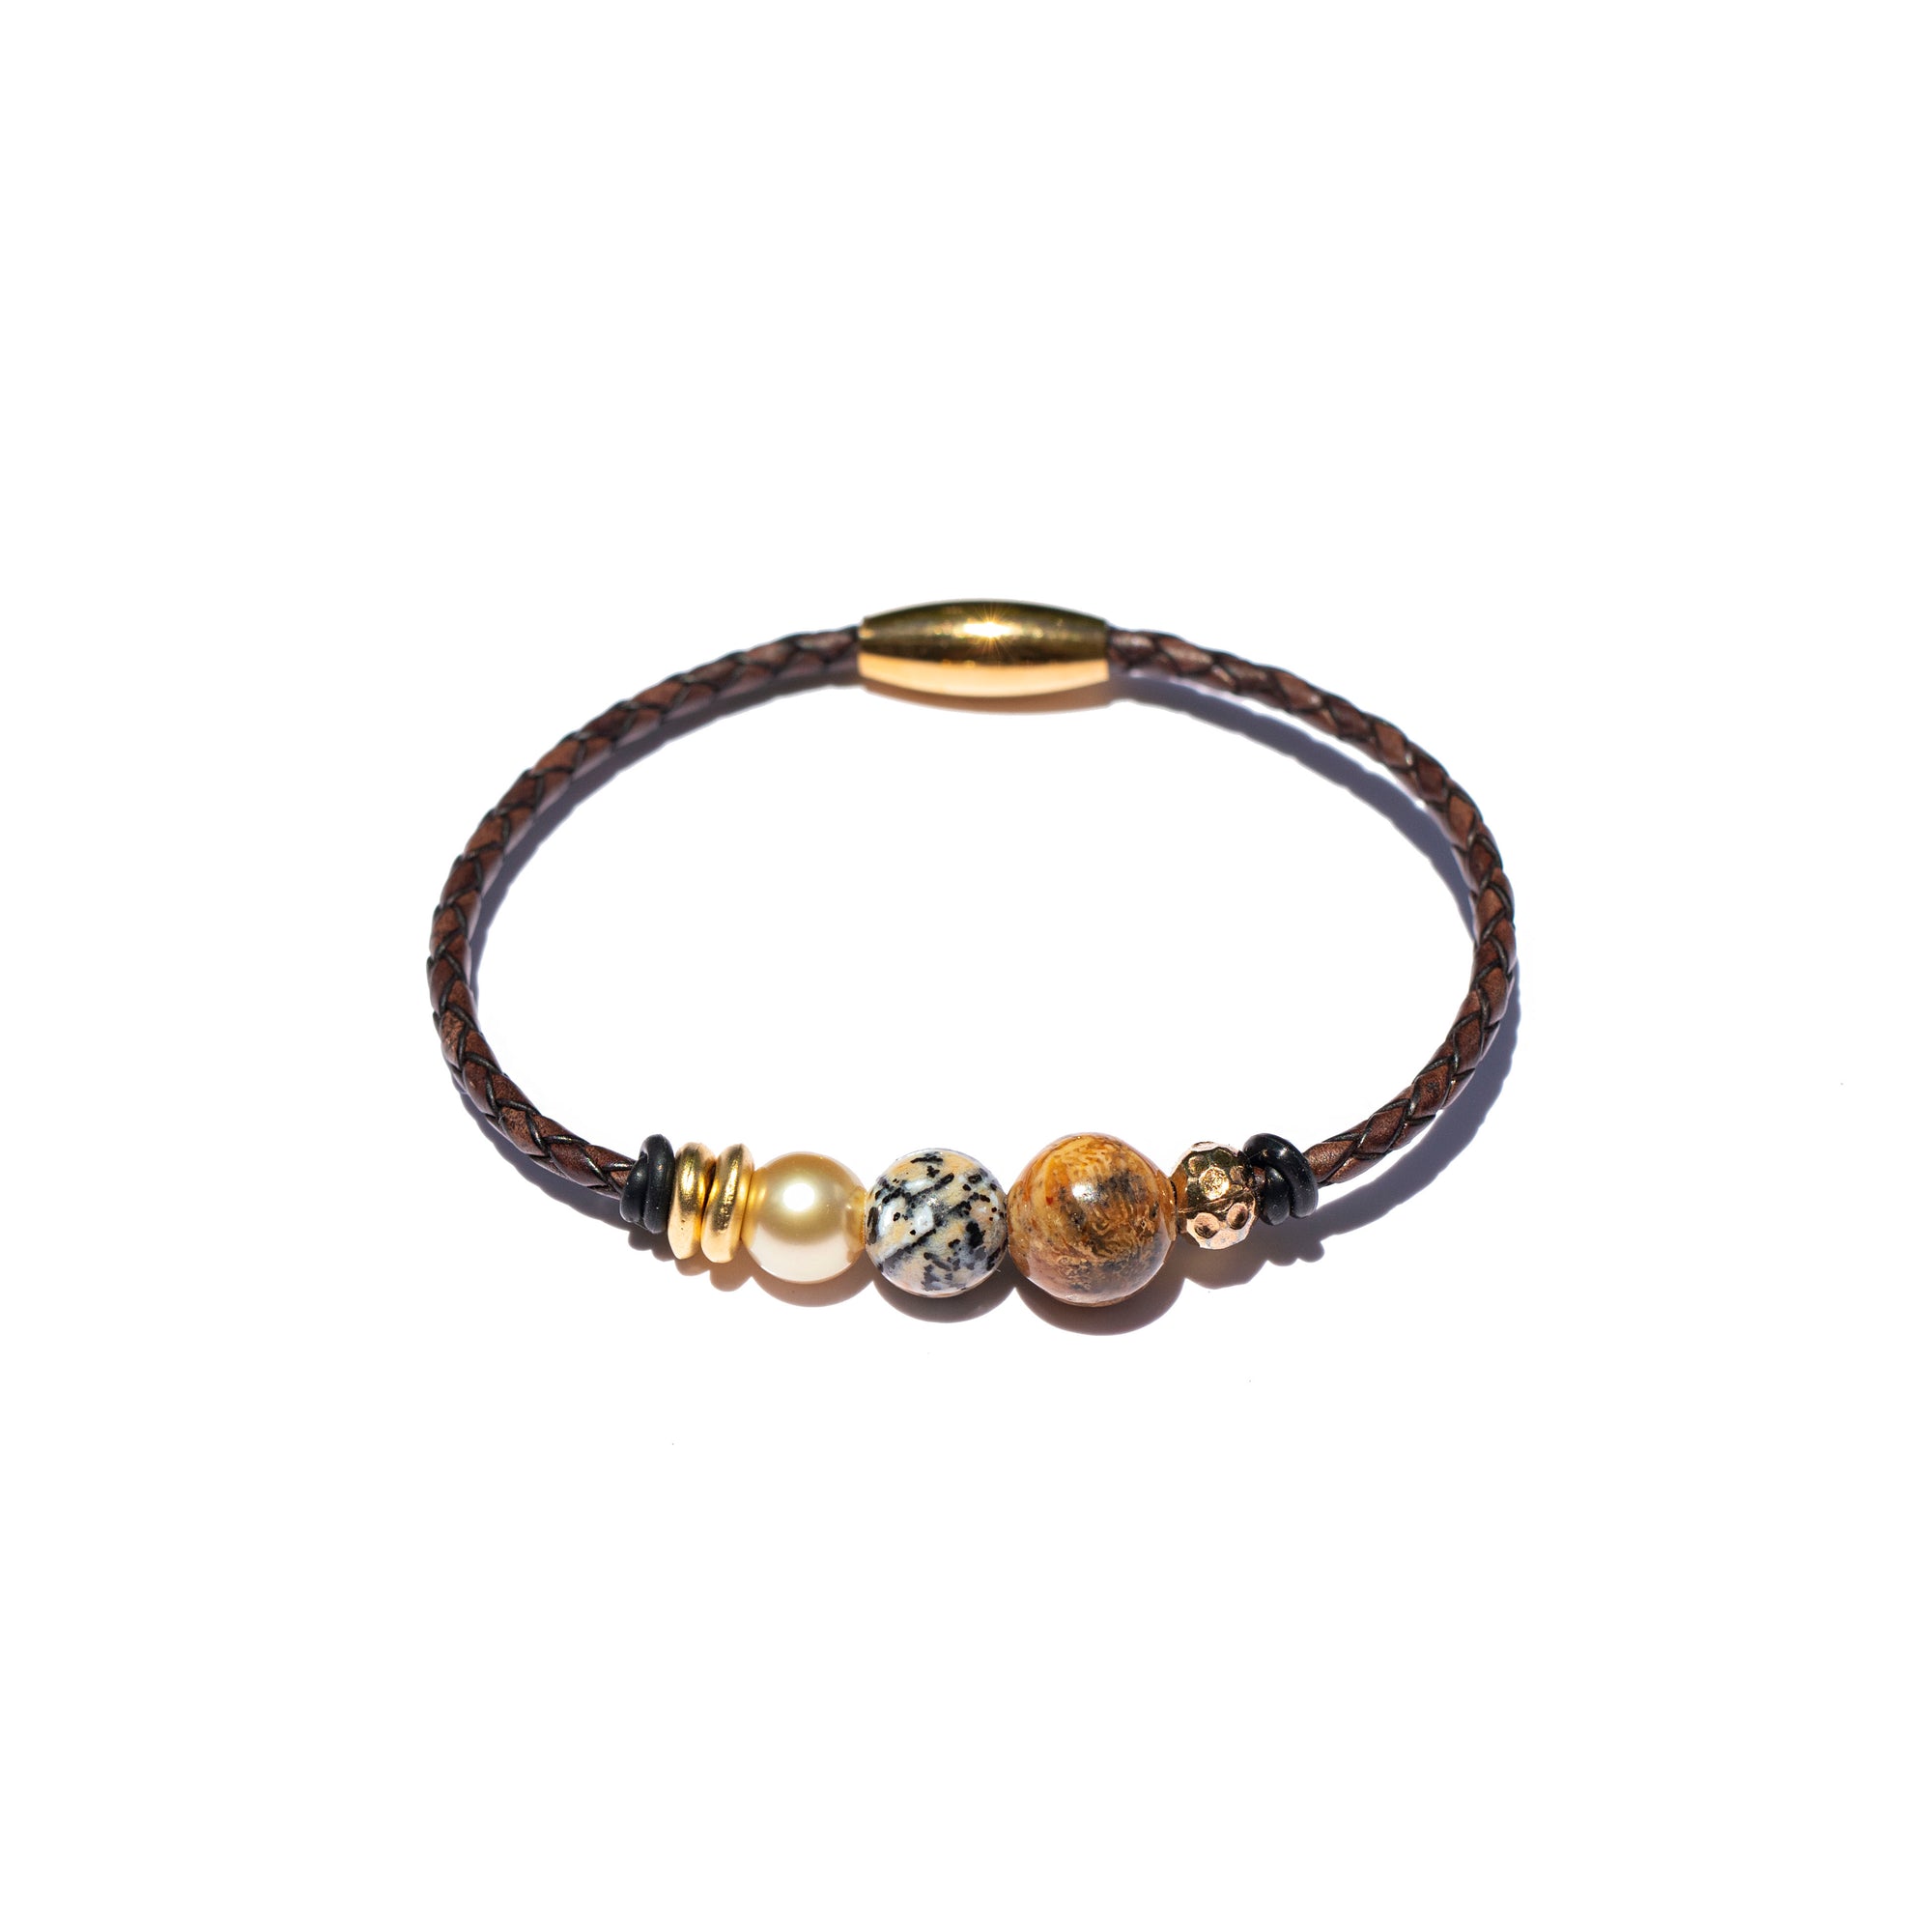 Storyteller Collection: 24K Gold Vermeil, Golden South Pearl, Dendritic Opal & Fossil Coral Bracelet